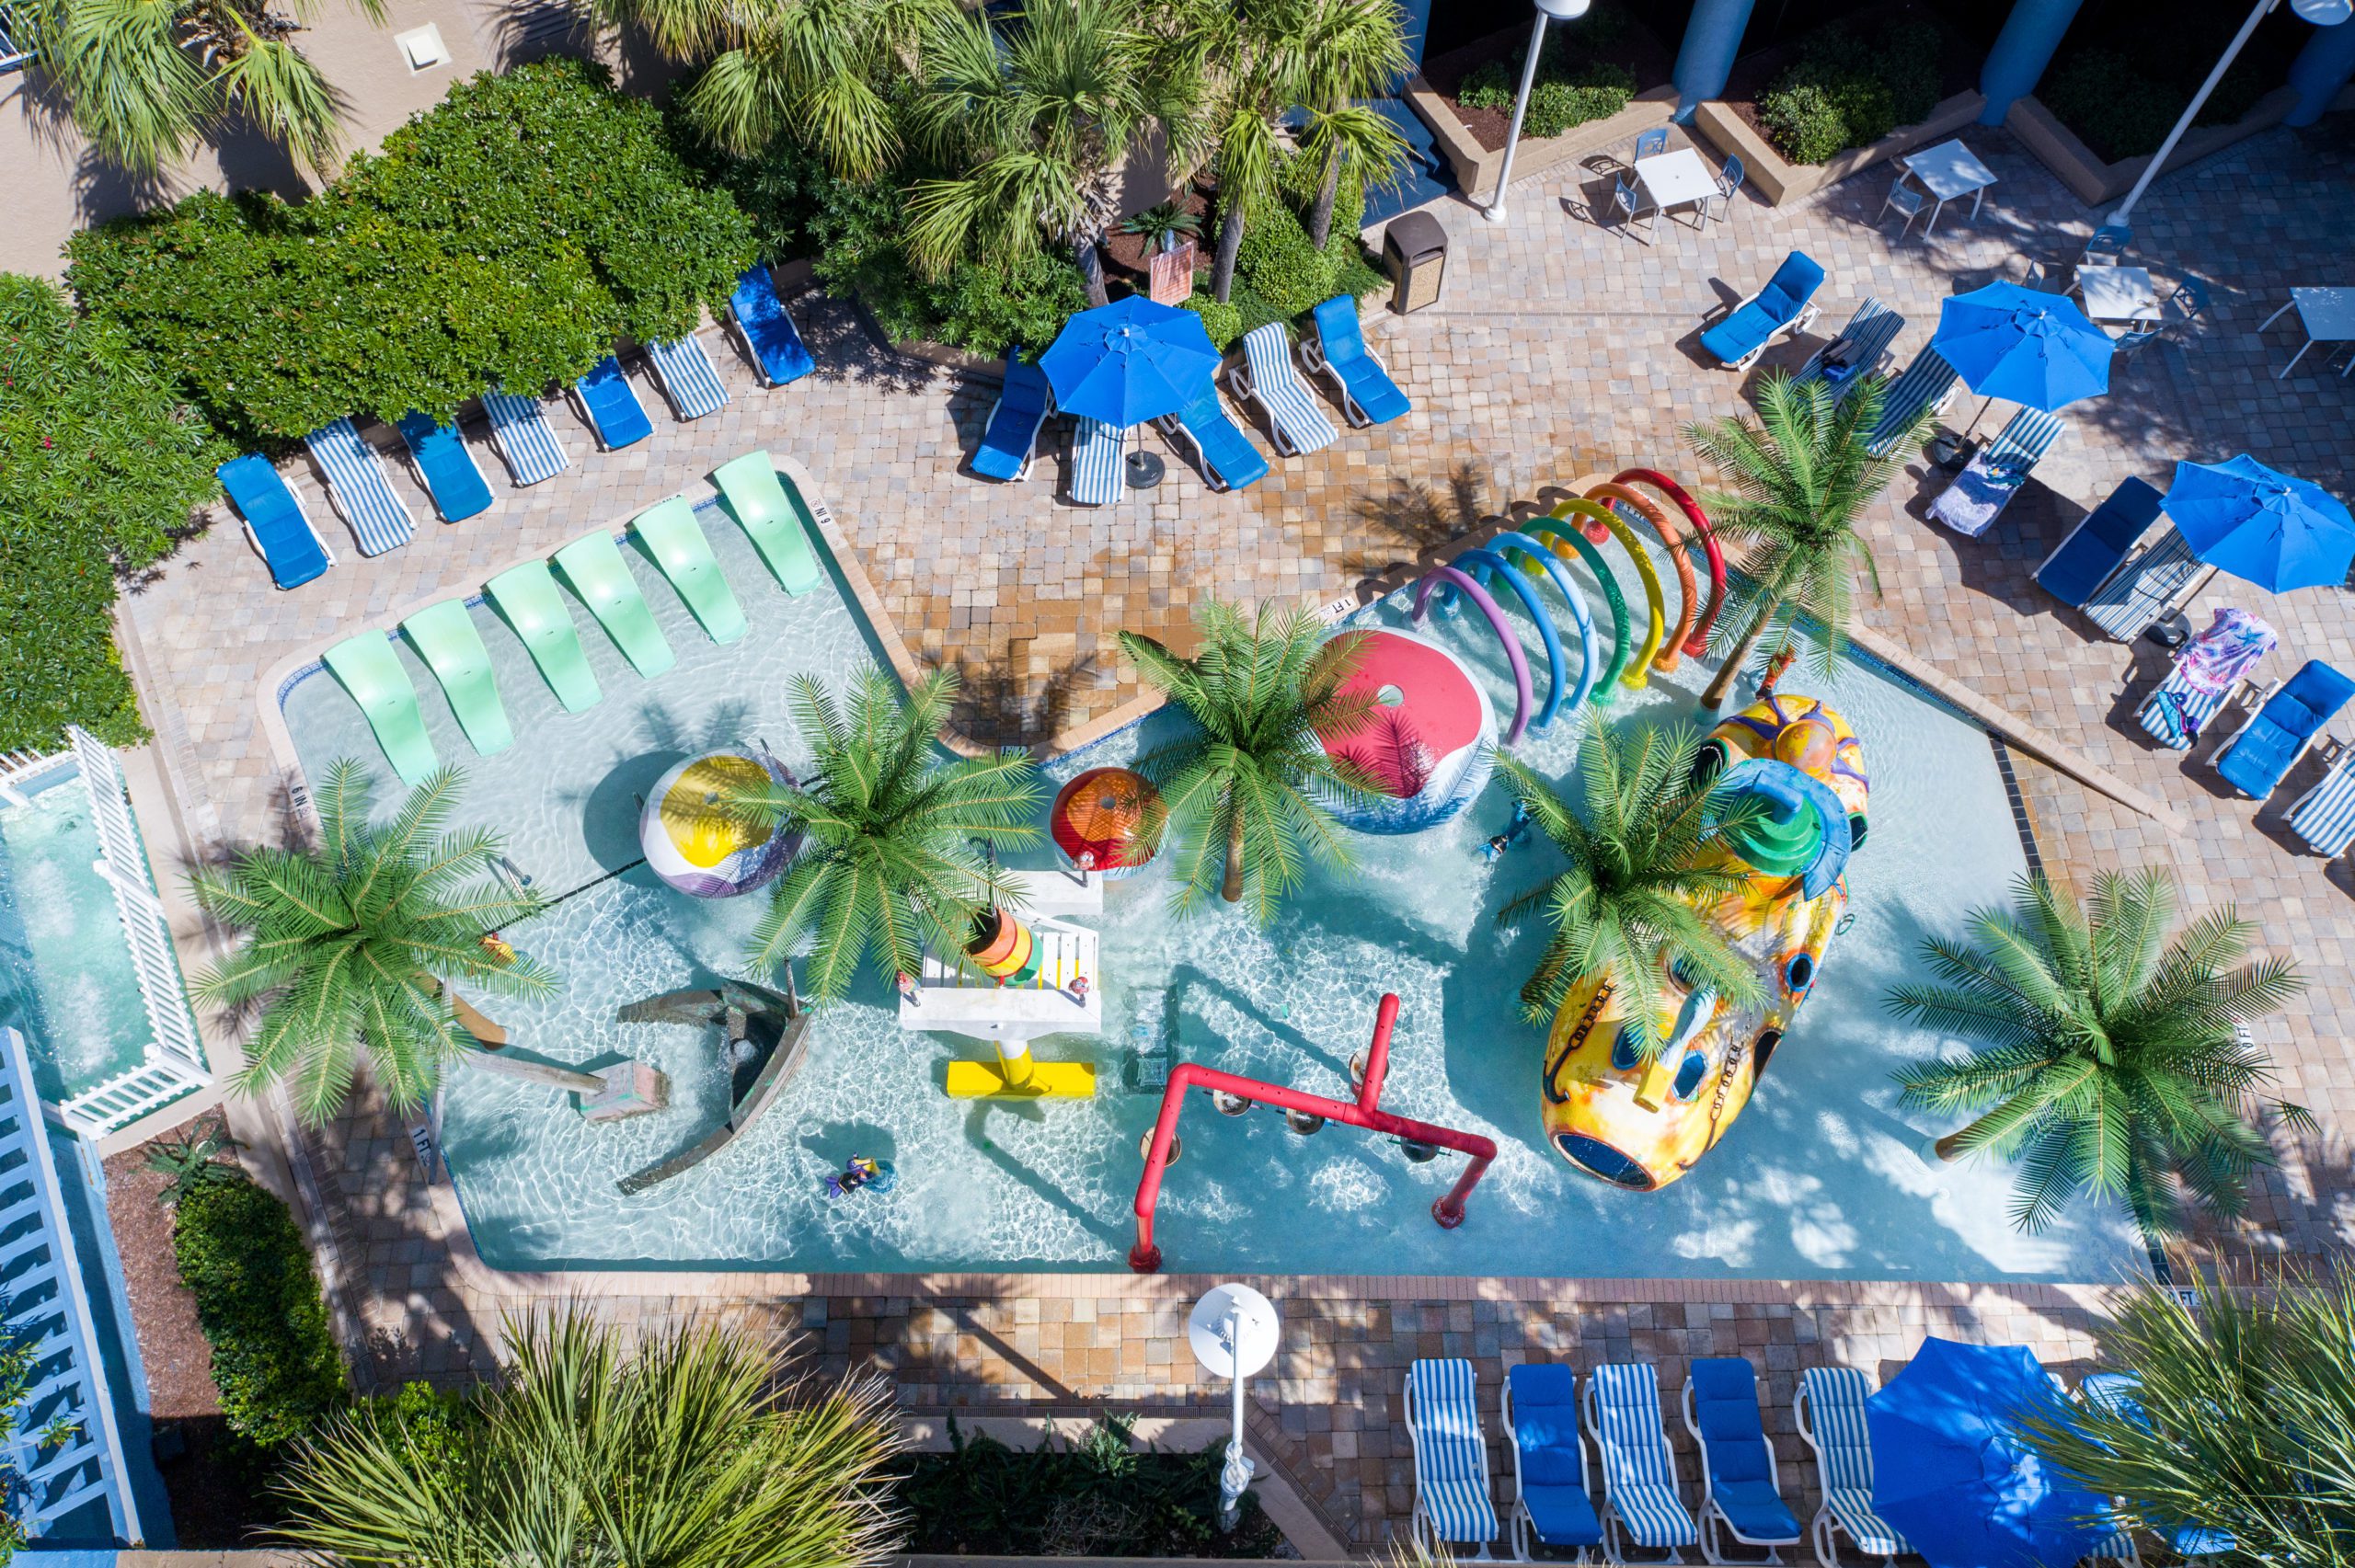 oceanfront water park for children at myrtle beach resort - coral beach